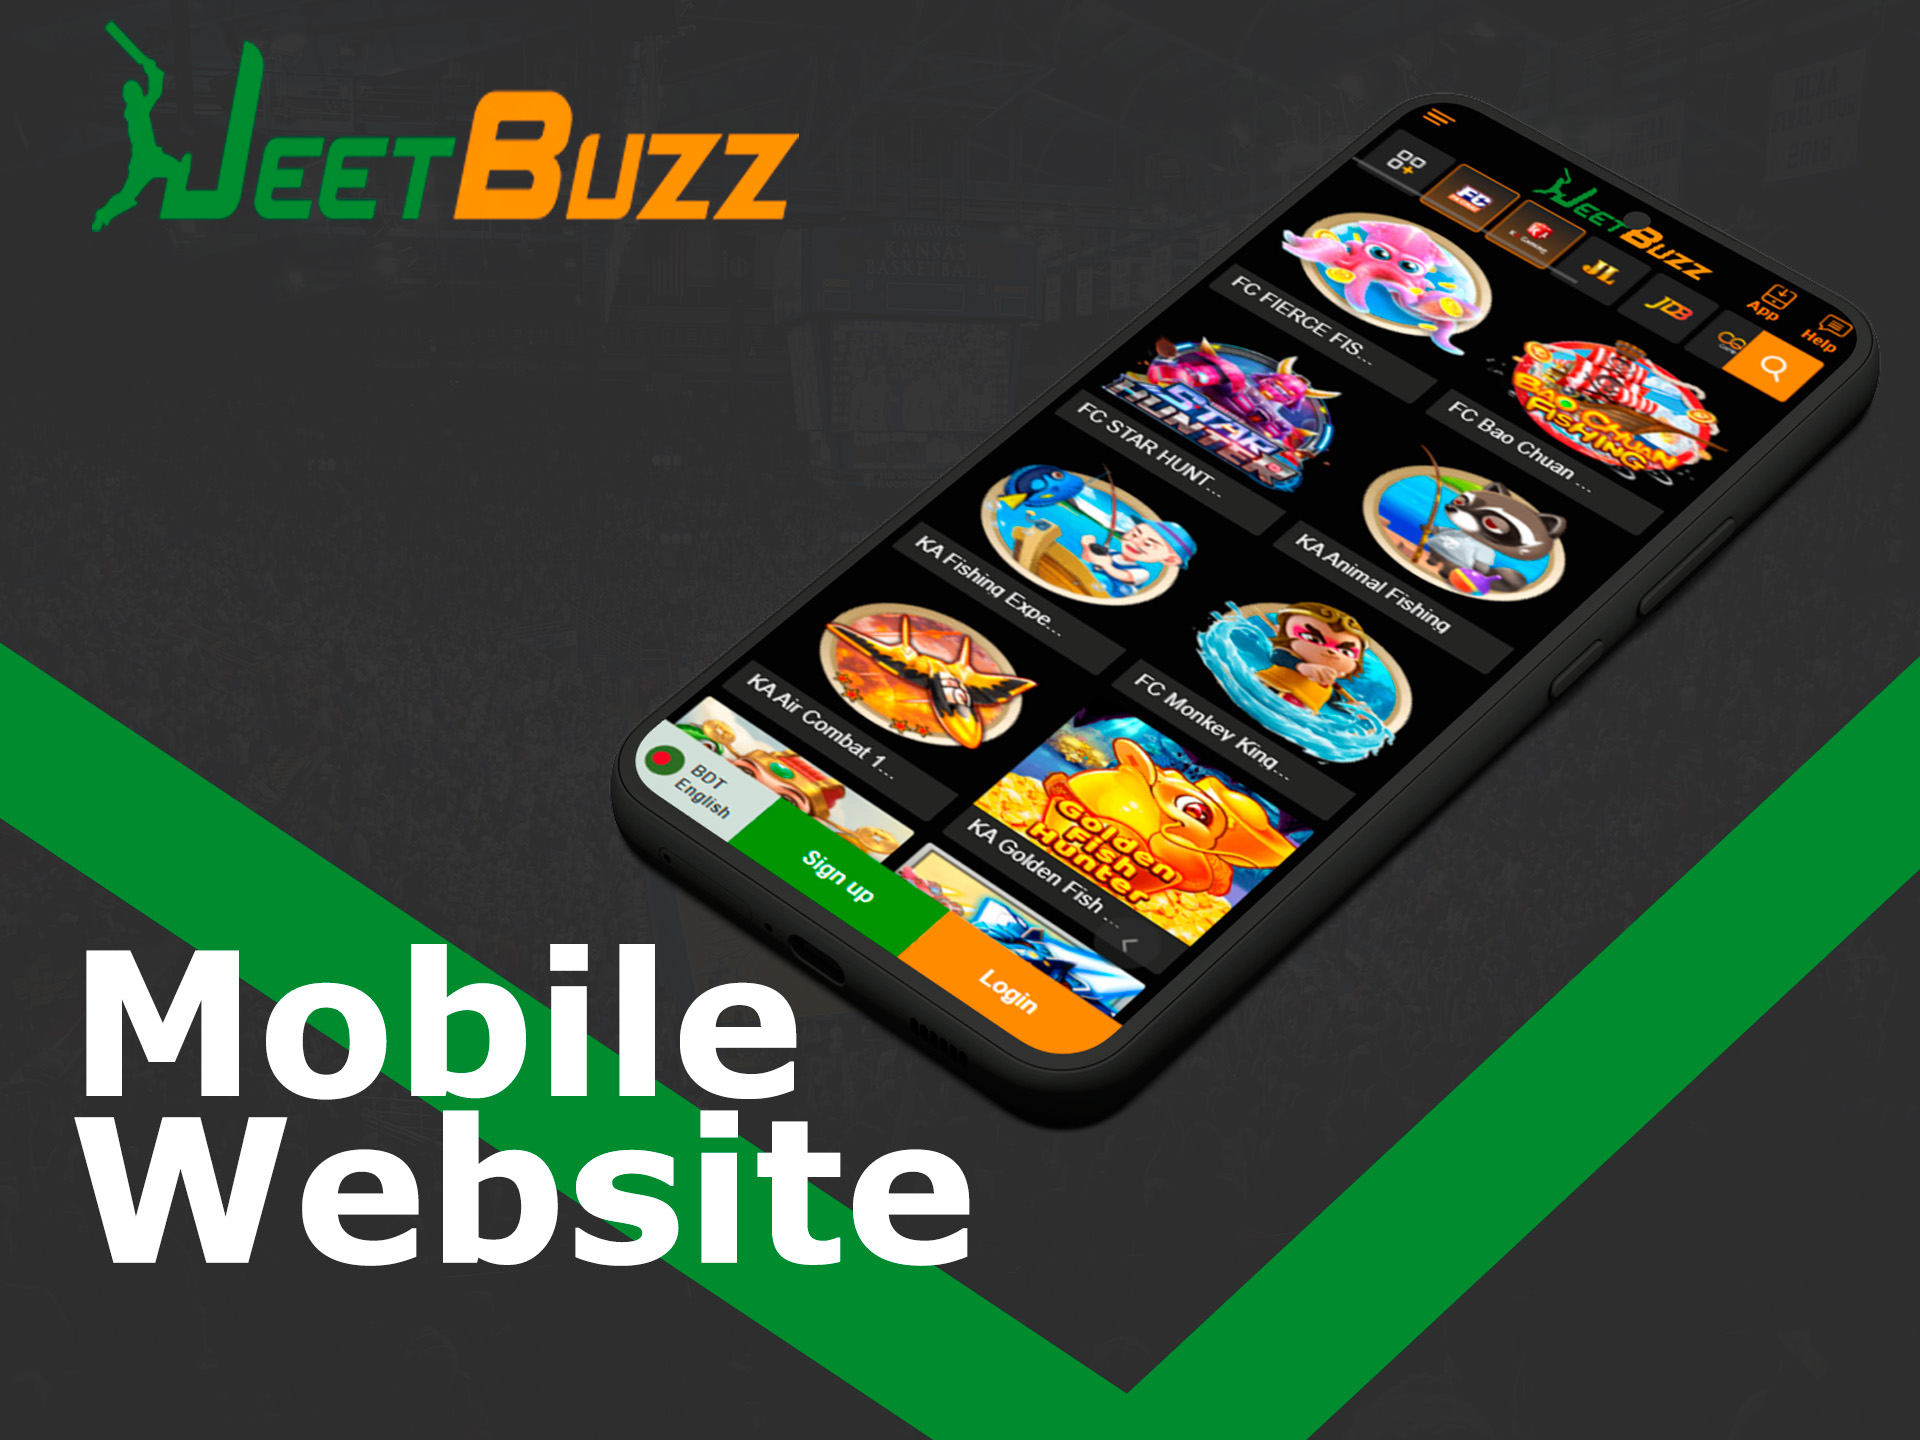 jeetbuzz mobile website